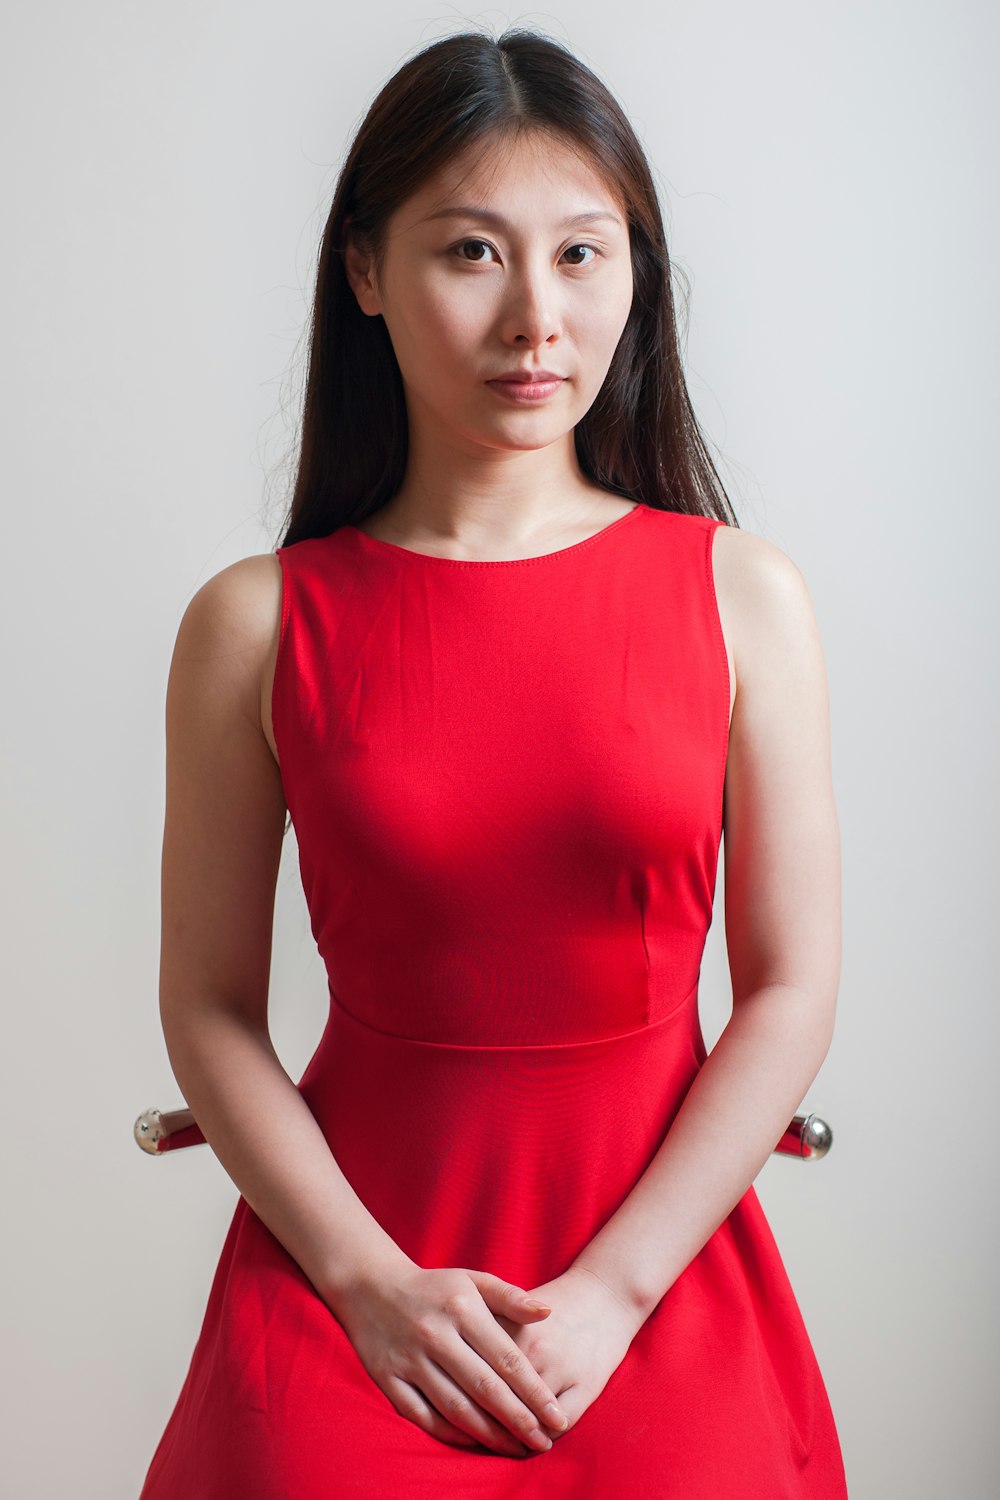 woman wearing red sleeveless dress